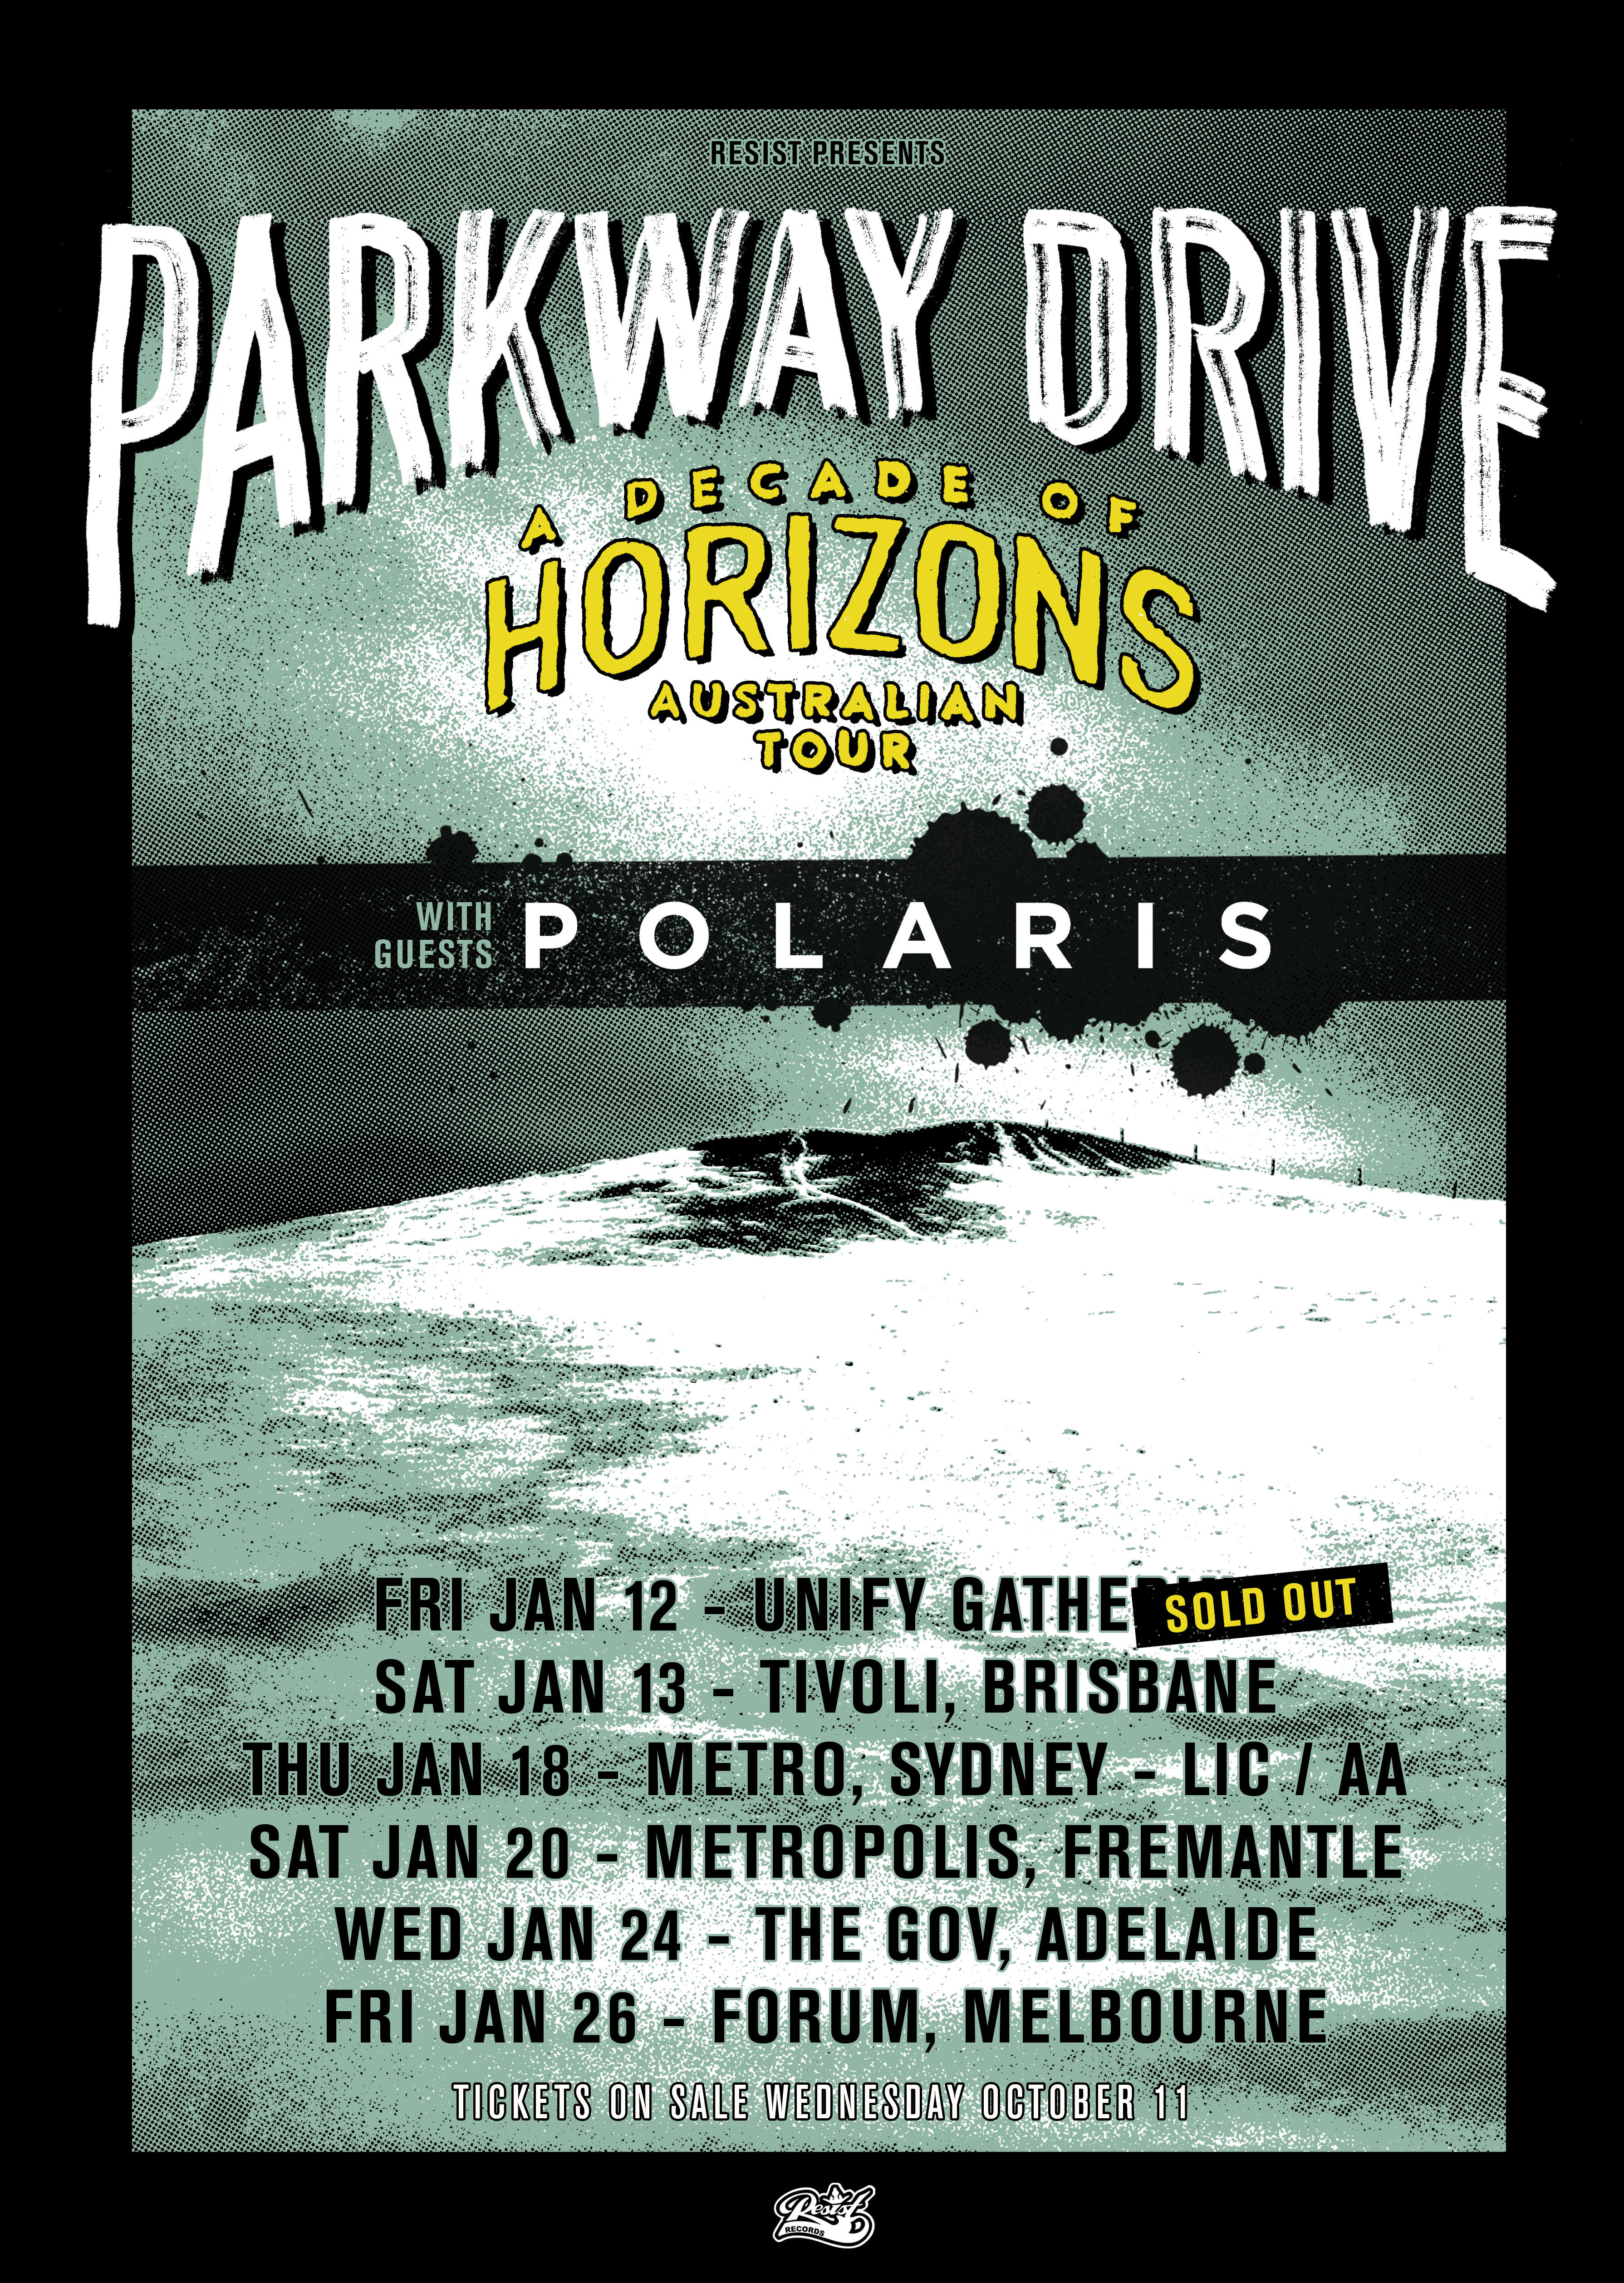 PARKWAY DRIVE Announce A DECADE OF HORIZONS Australian Tour